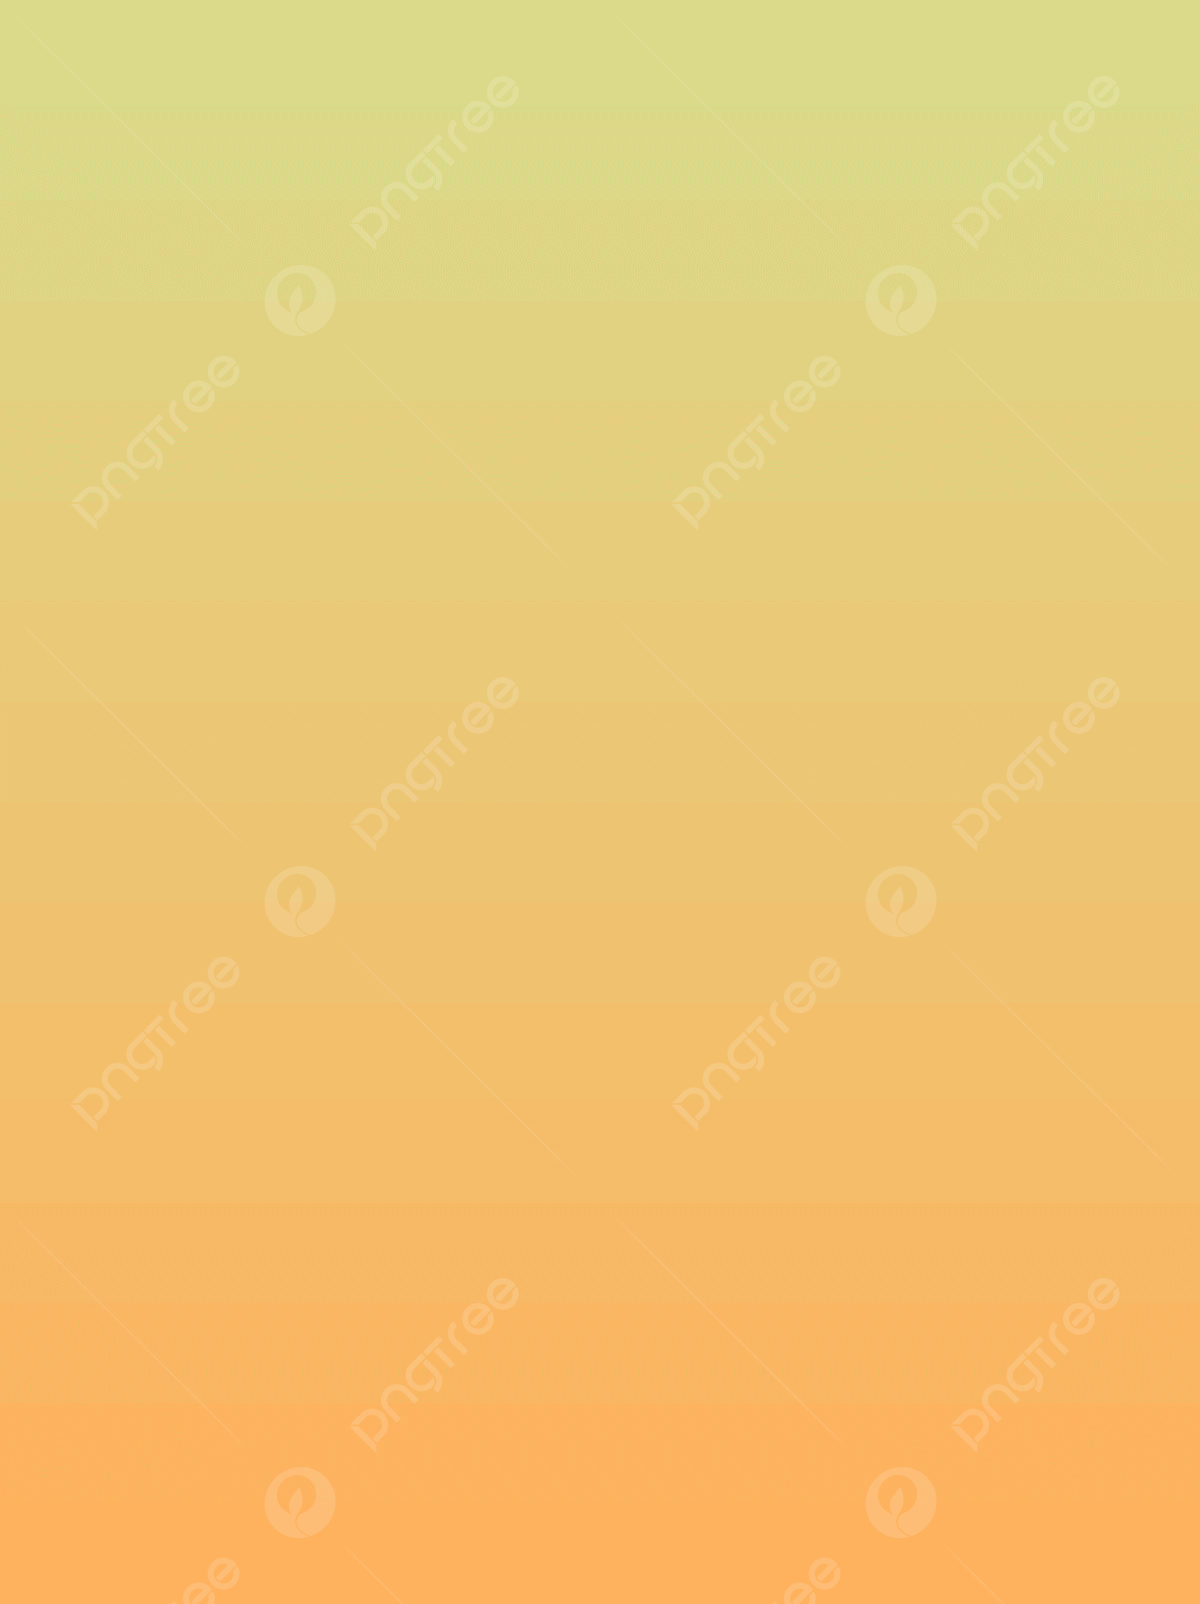 Aesthetic Yellow And Orange Wallpapers